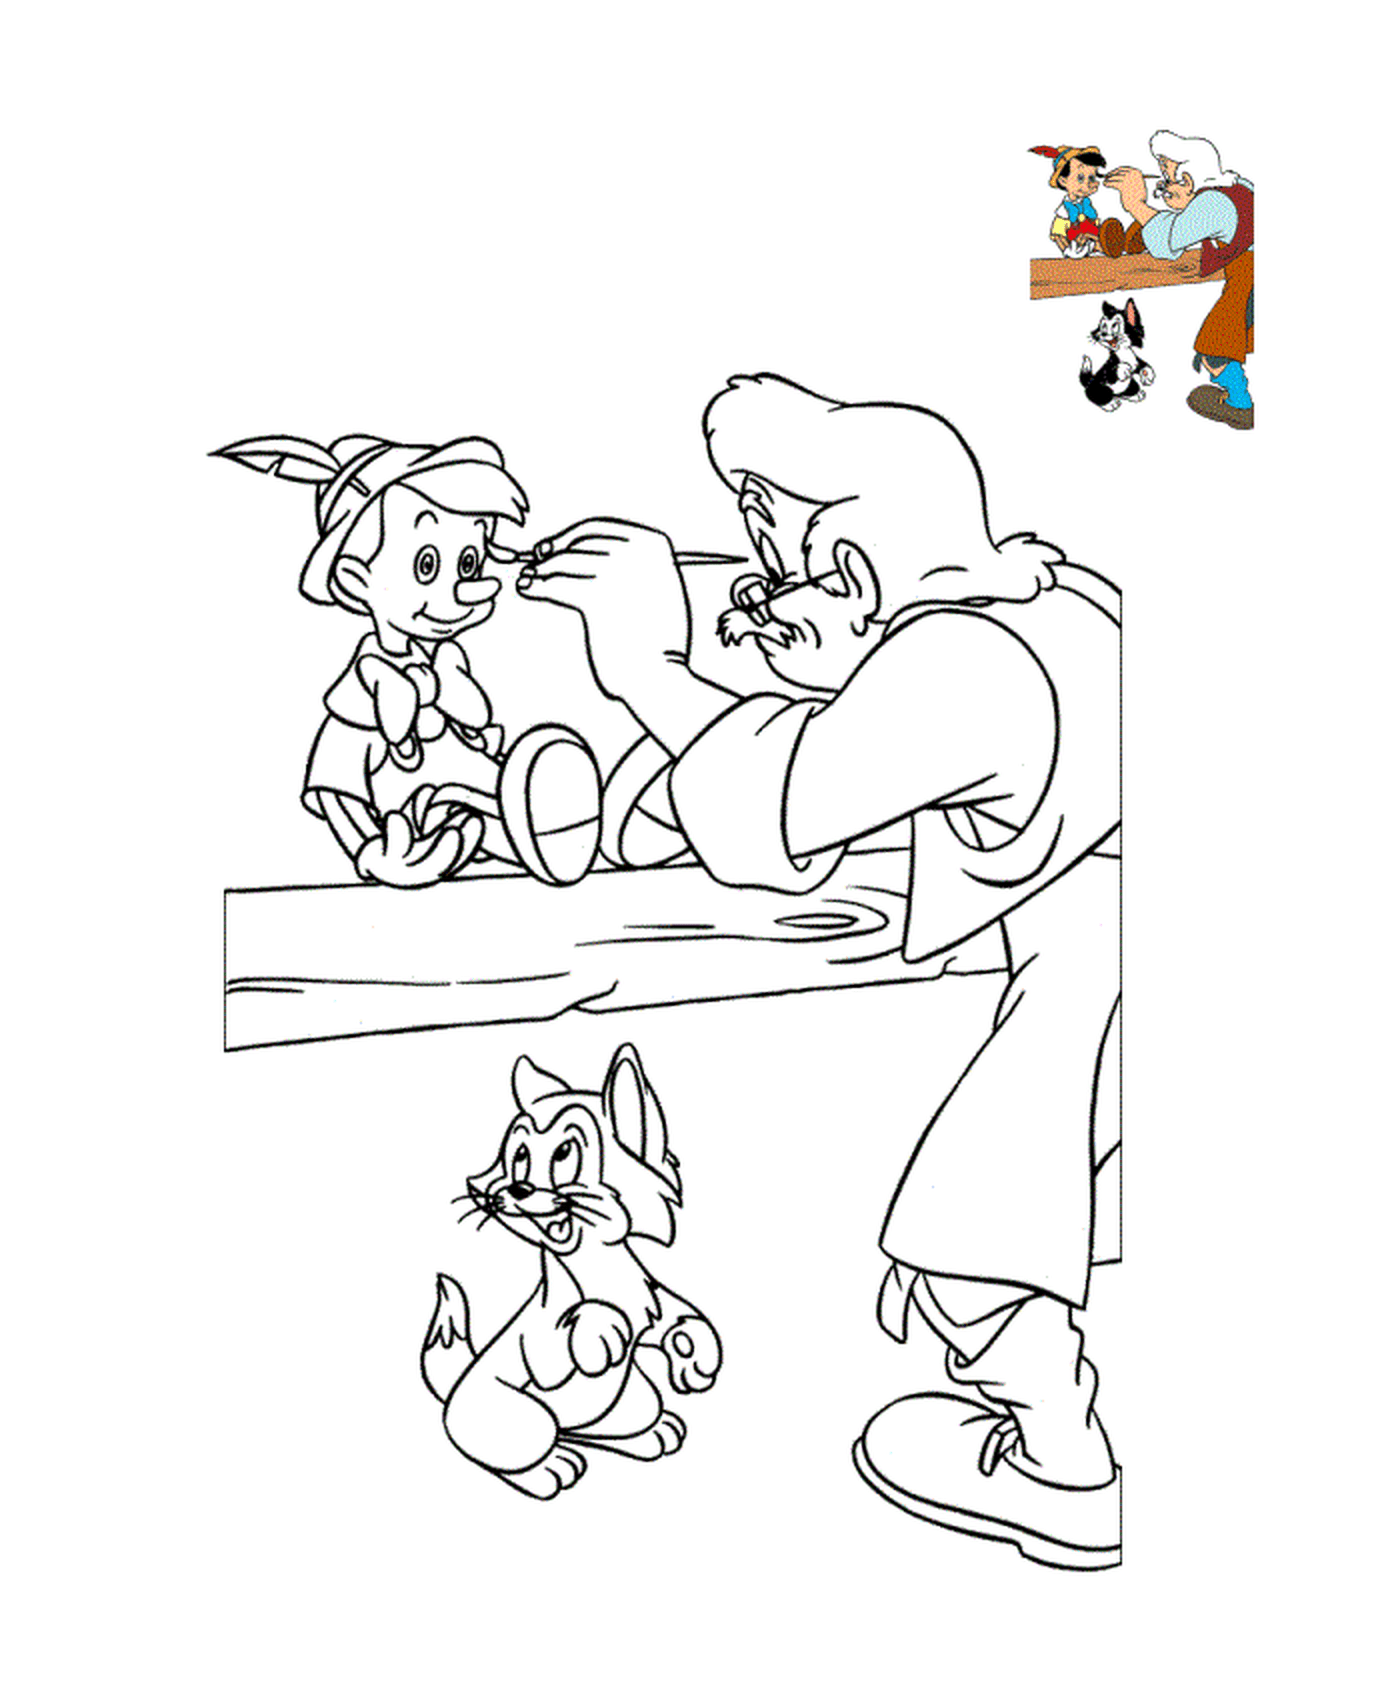   Geppetto, menuisier italien créatif 